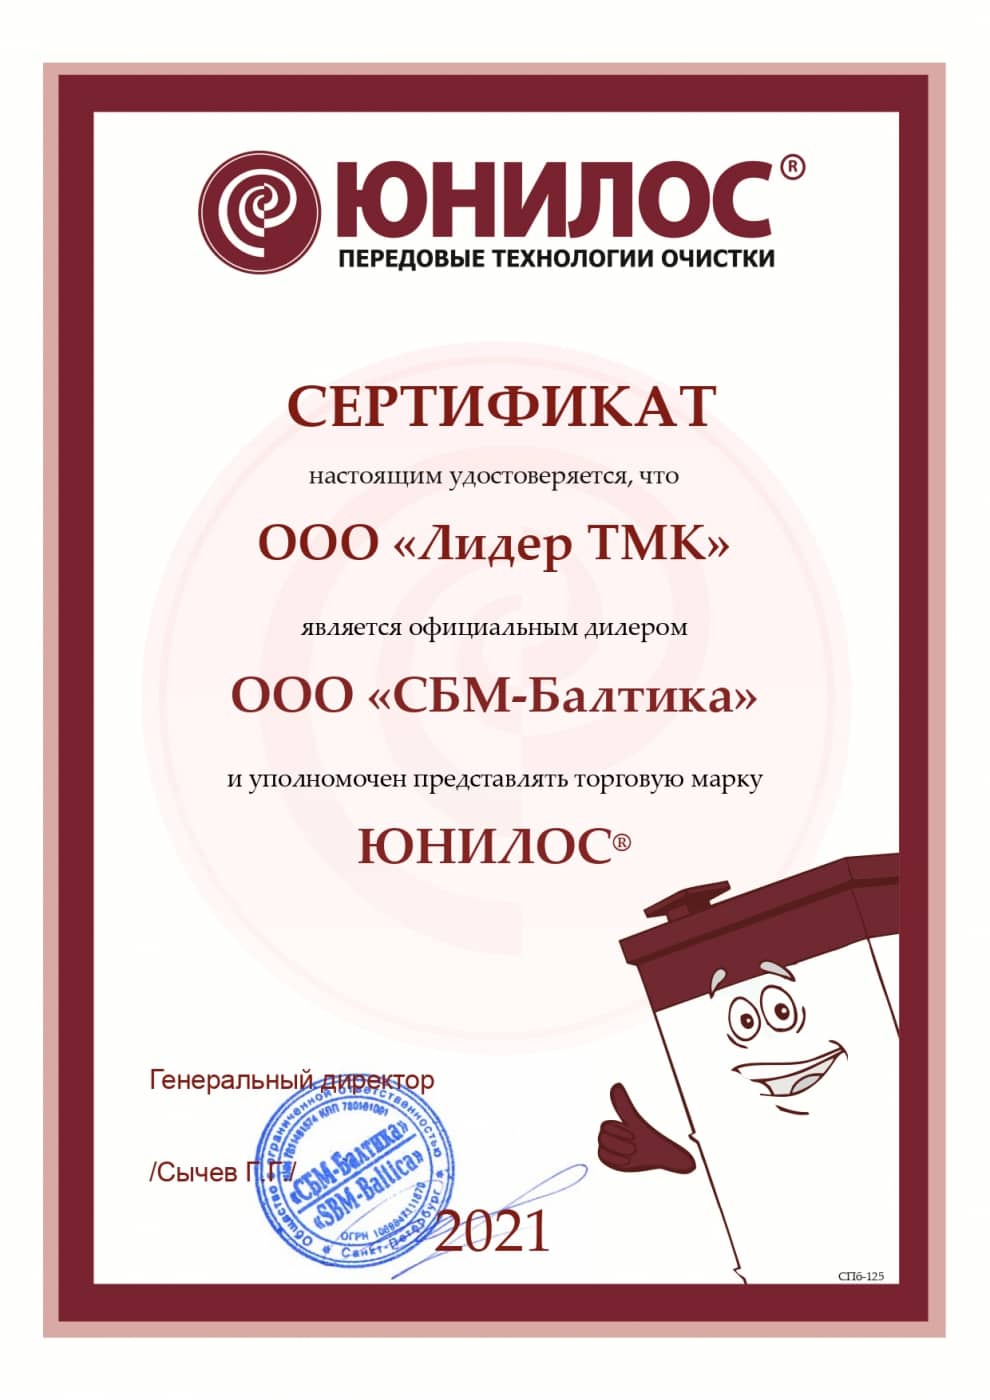 Септик Астра ДАБЛ 8 прин. сертификат